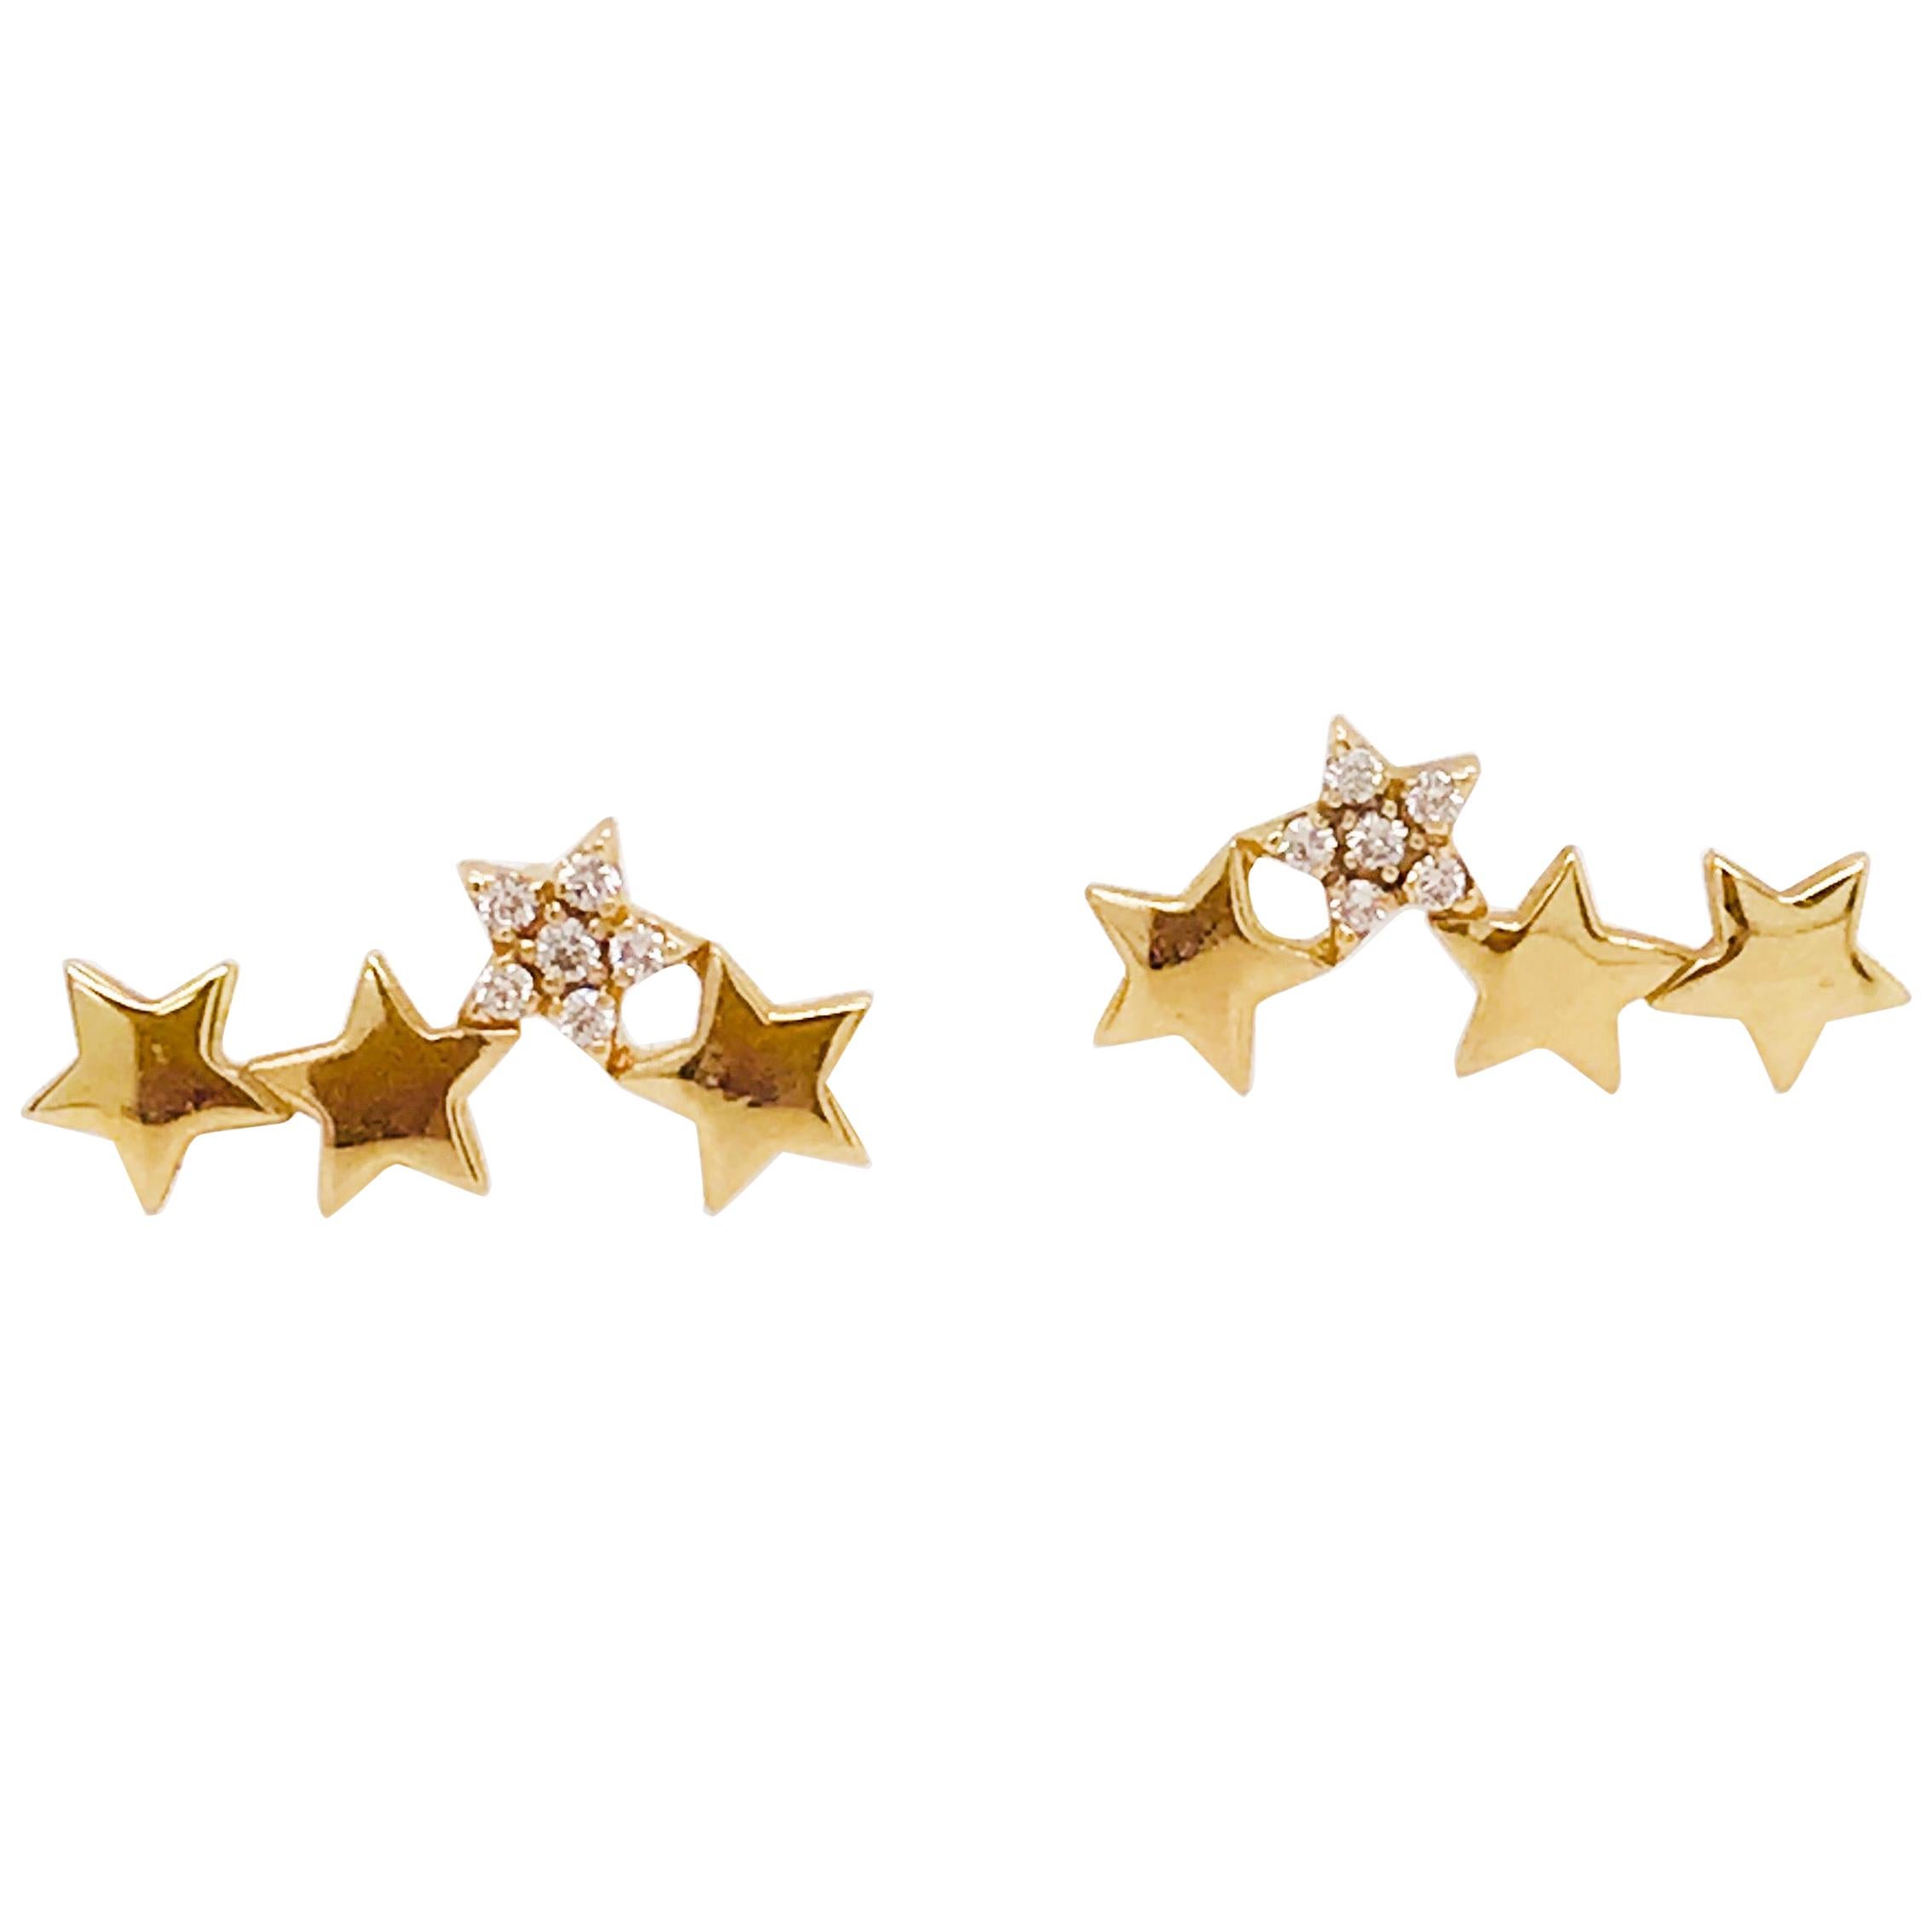 0.10 Ct. Diamond Star Ear Climbers 14K Yellow Gold, Diamond Star Earring Studs